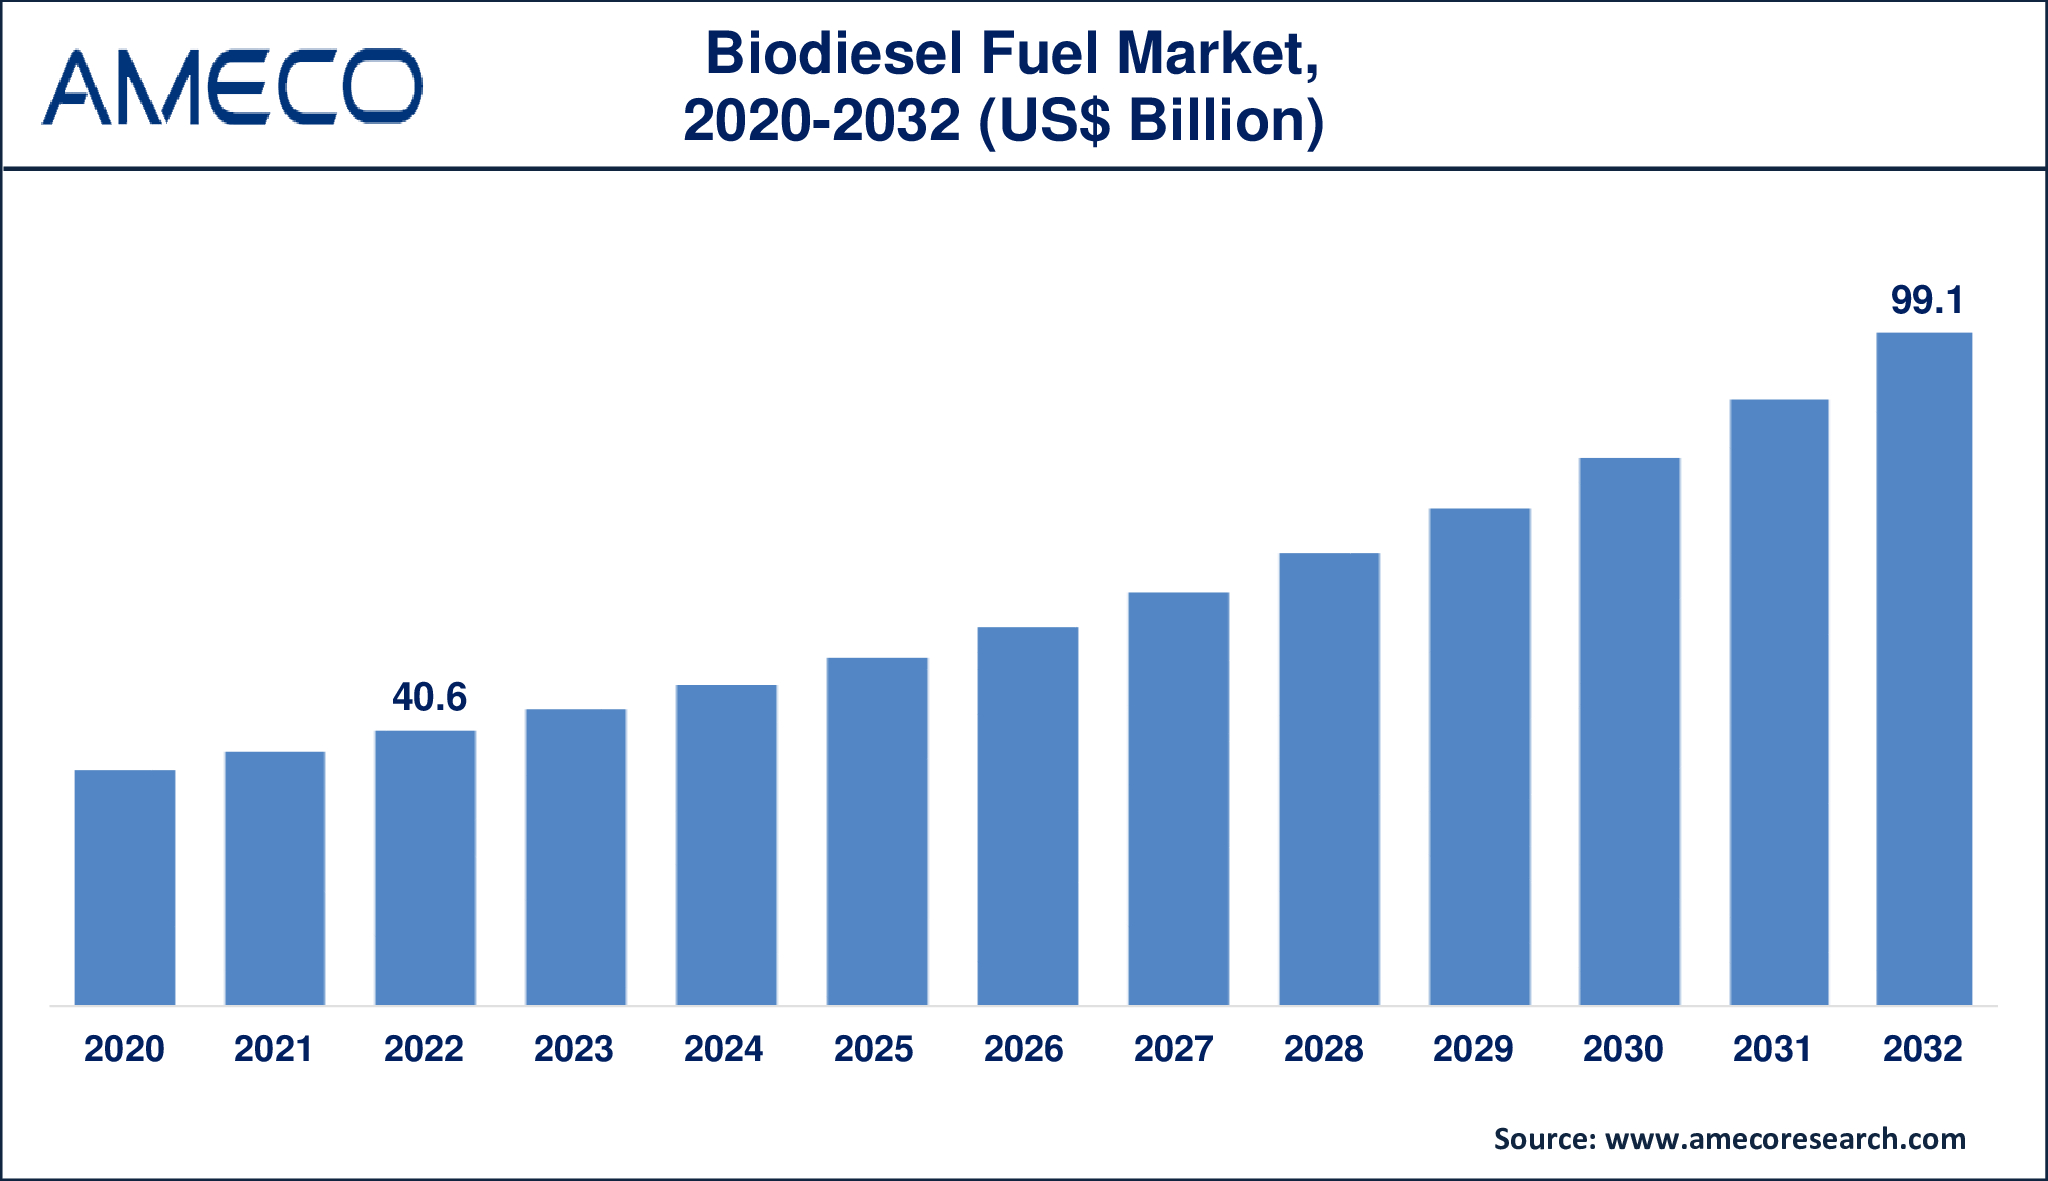 Biodiesel Fuel Market Dynamics